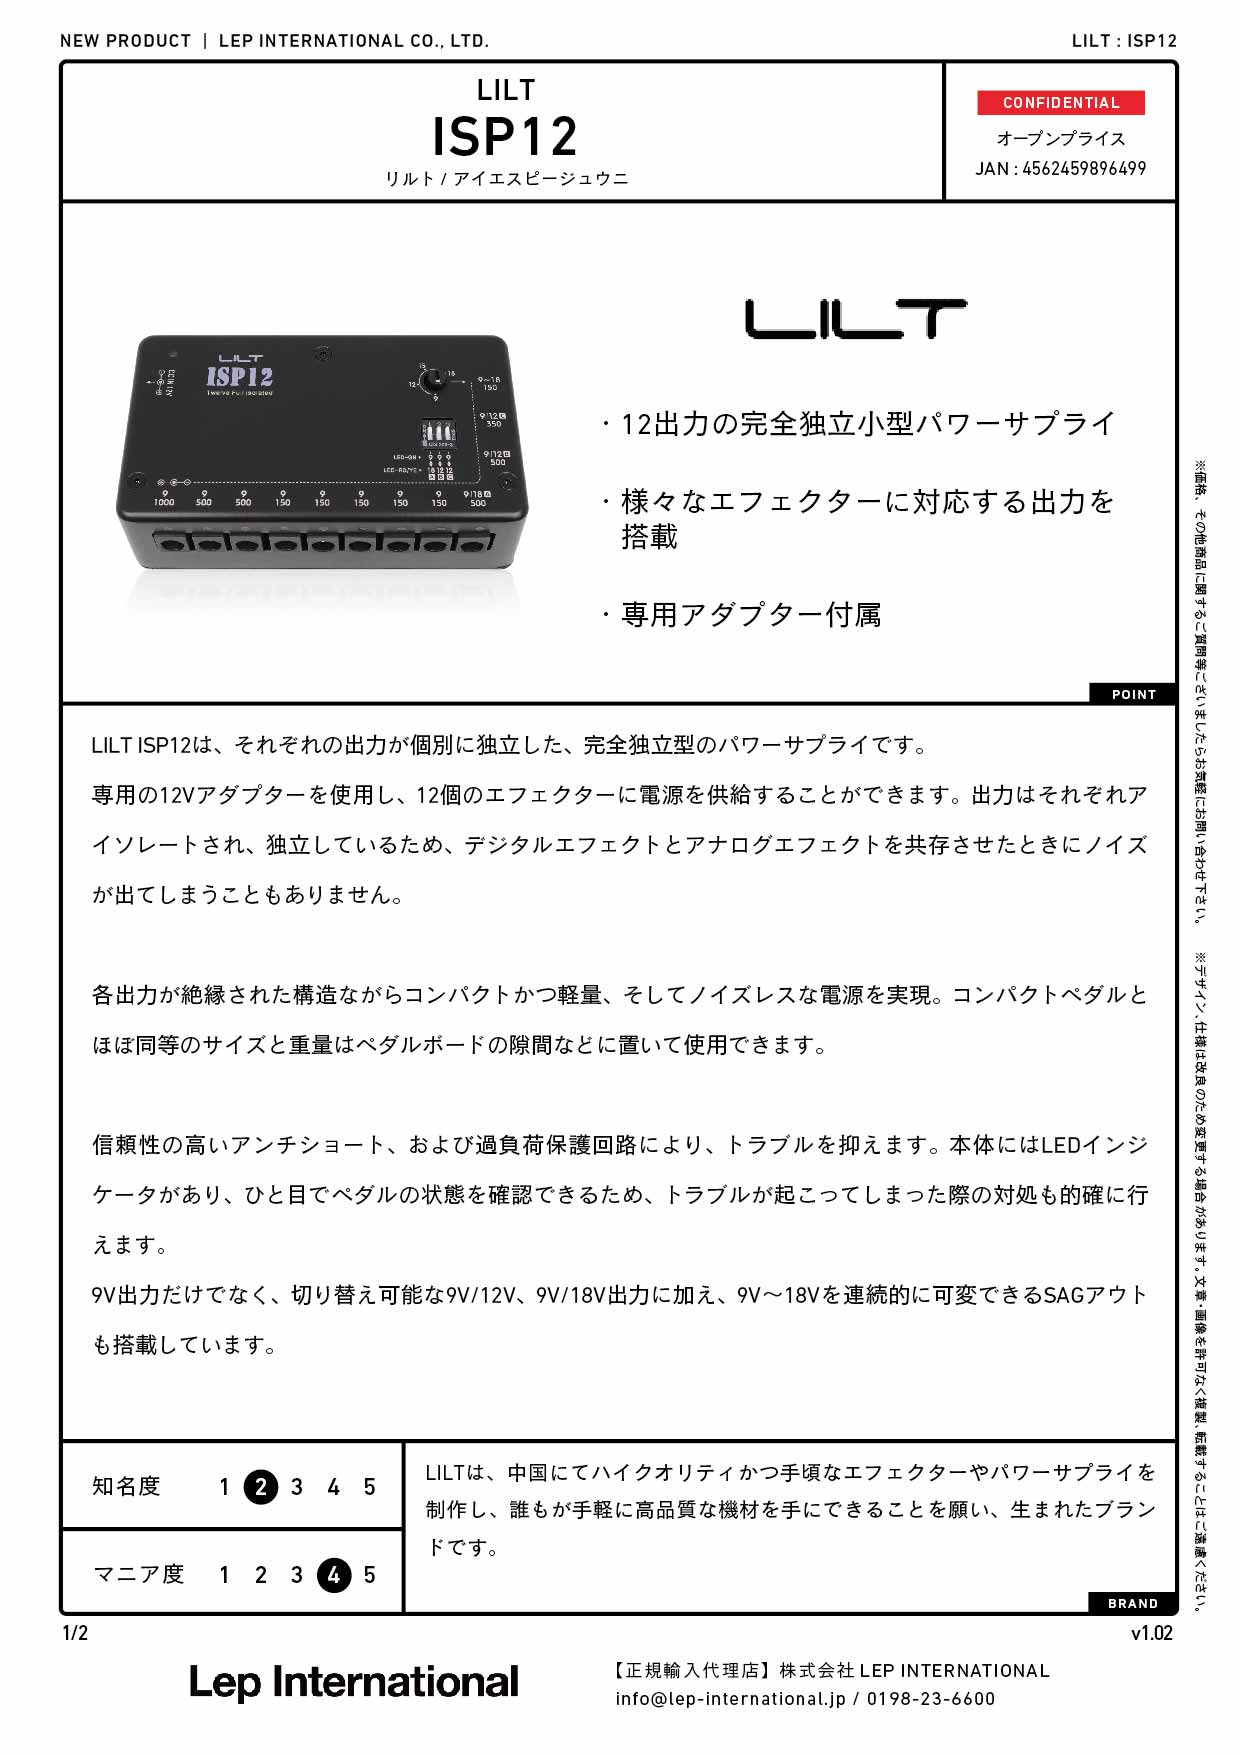 LILT/ISP12